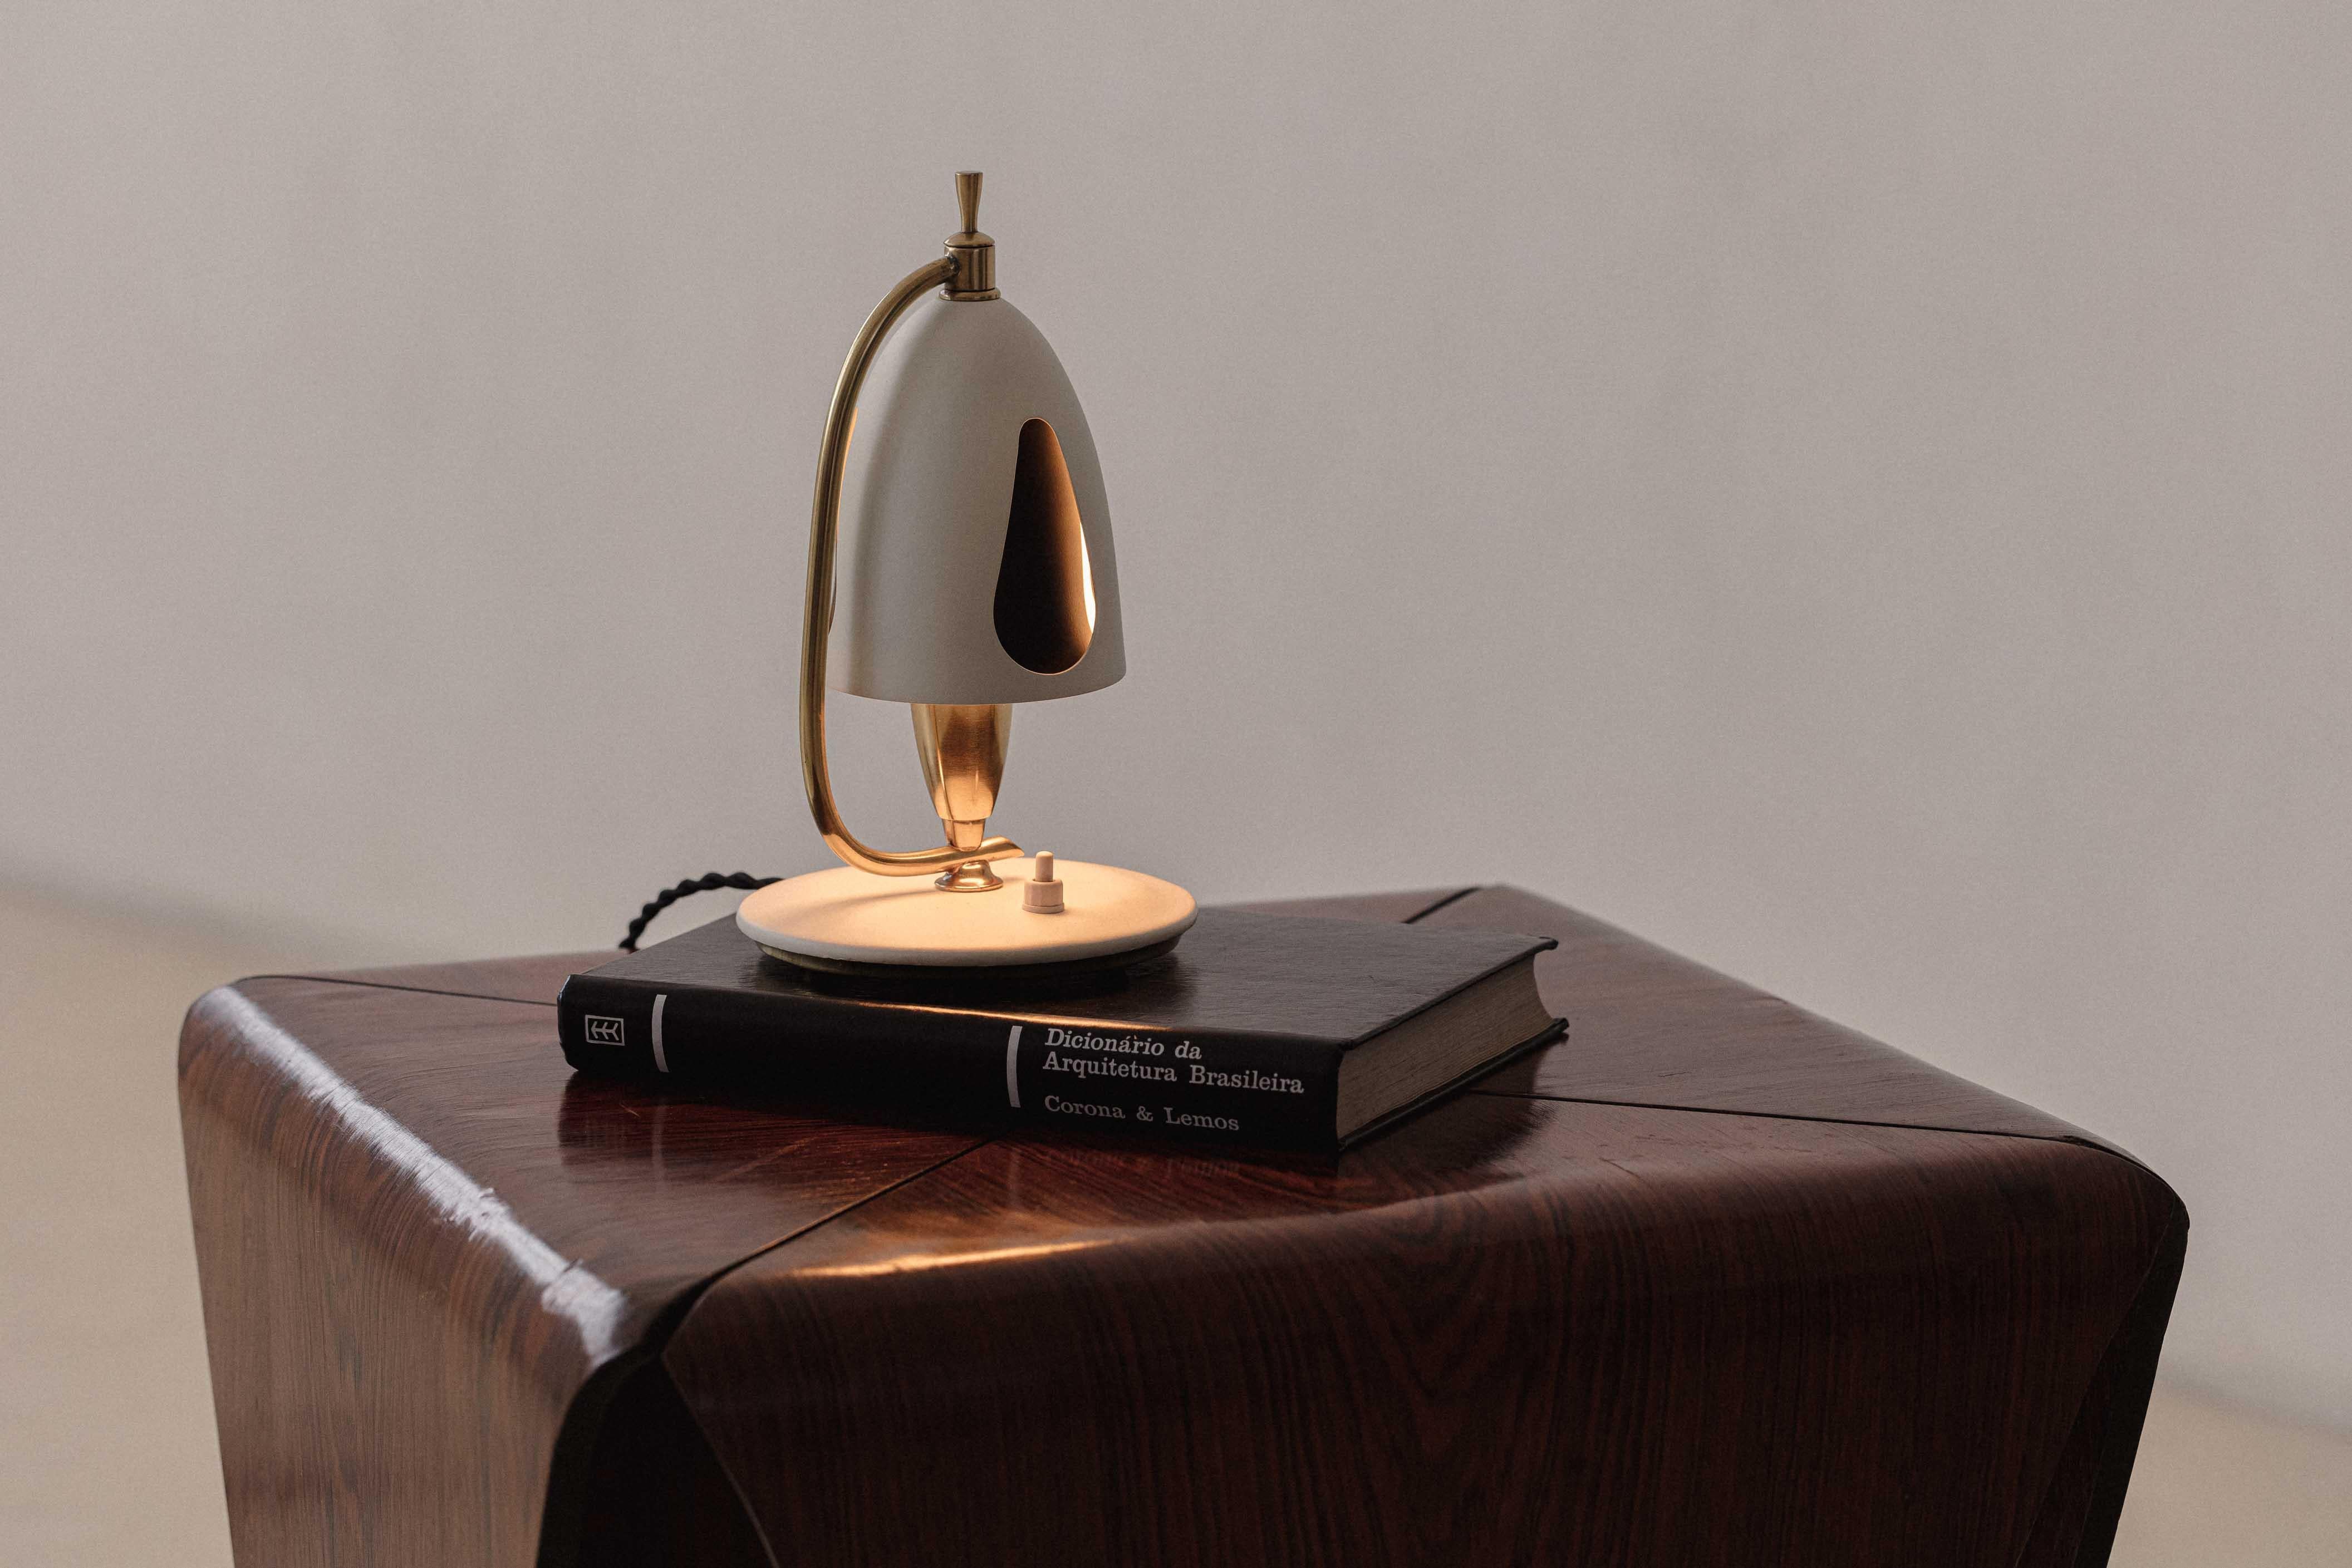 Mid-Century Modern Midcentury Bedside Table Lamp, Brazilian Company Carlo Montalto & Filhos, 1950s For Sale